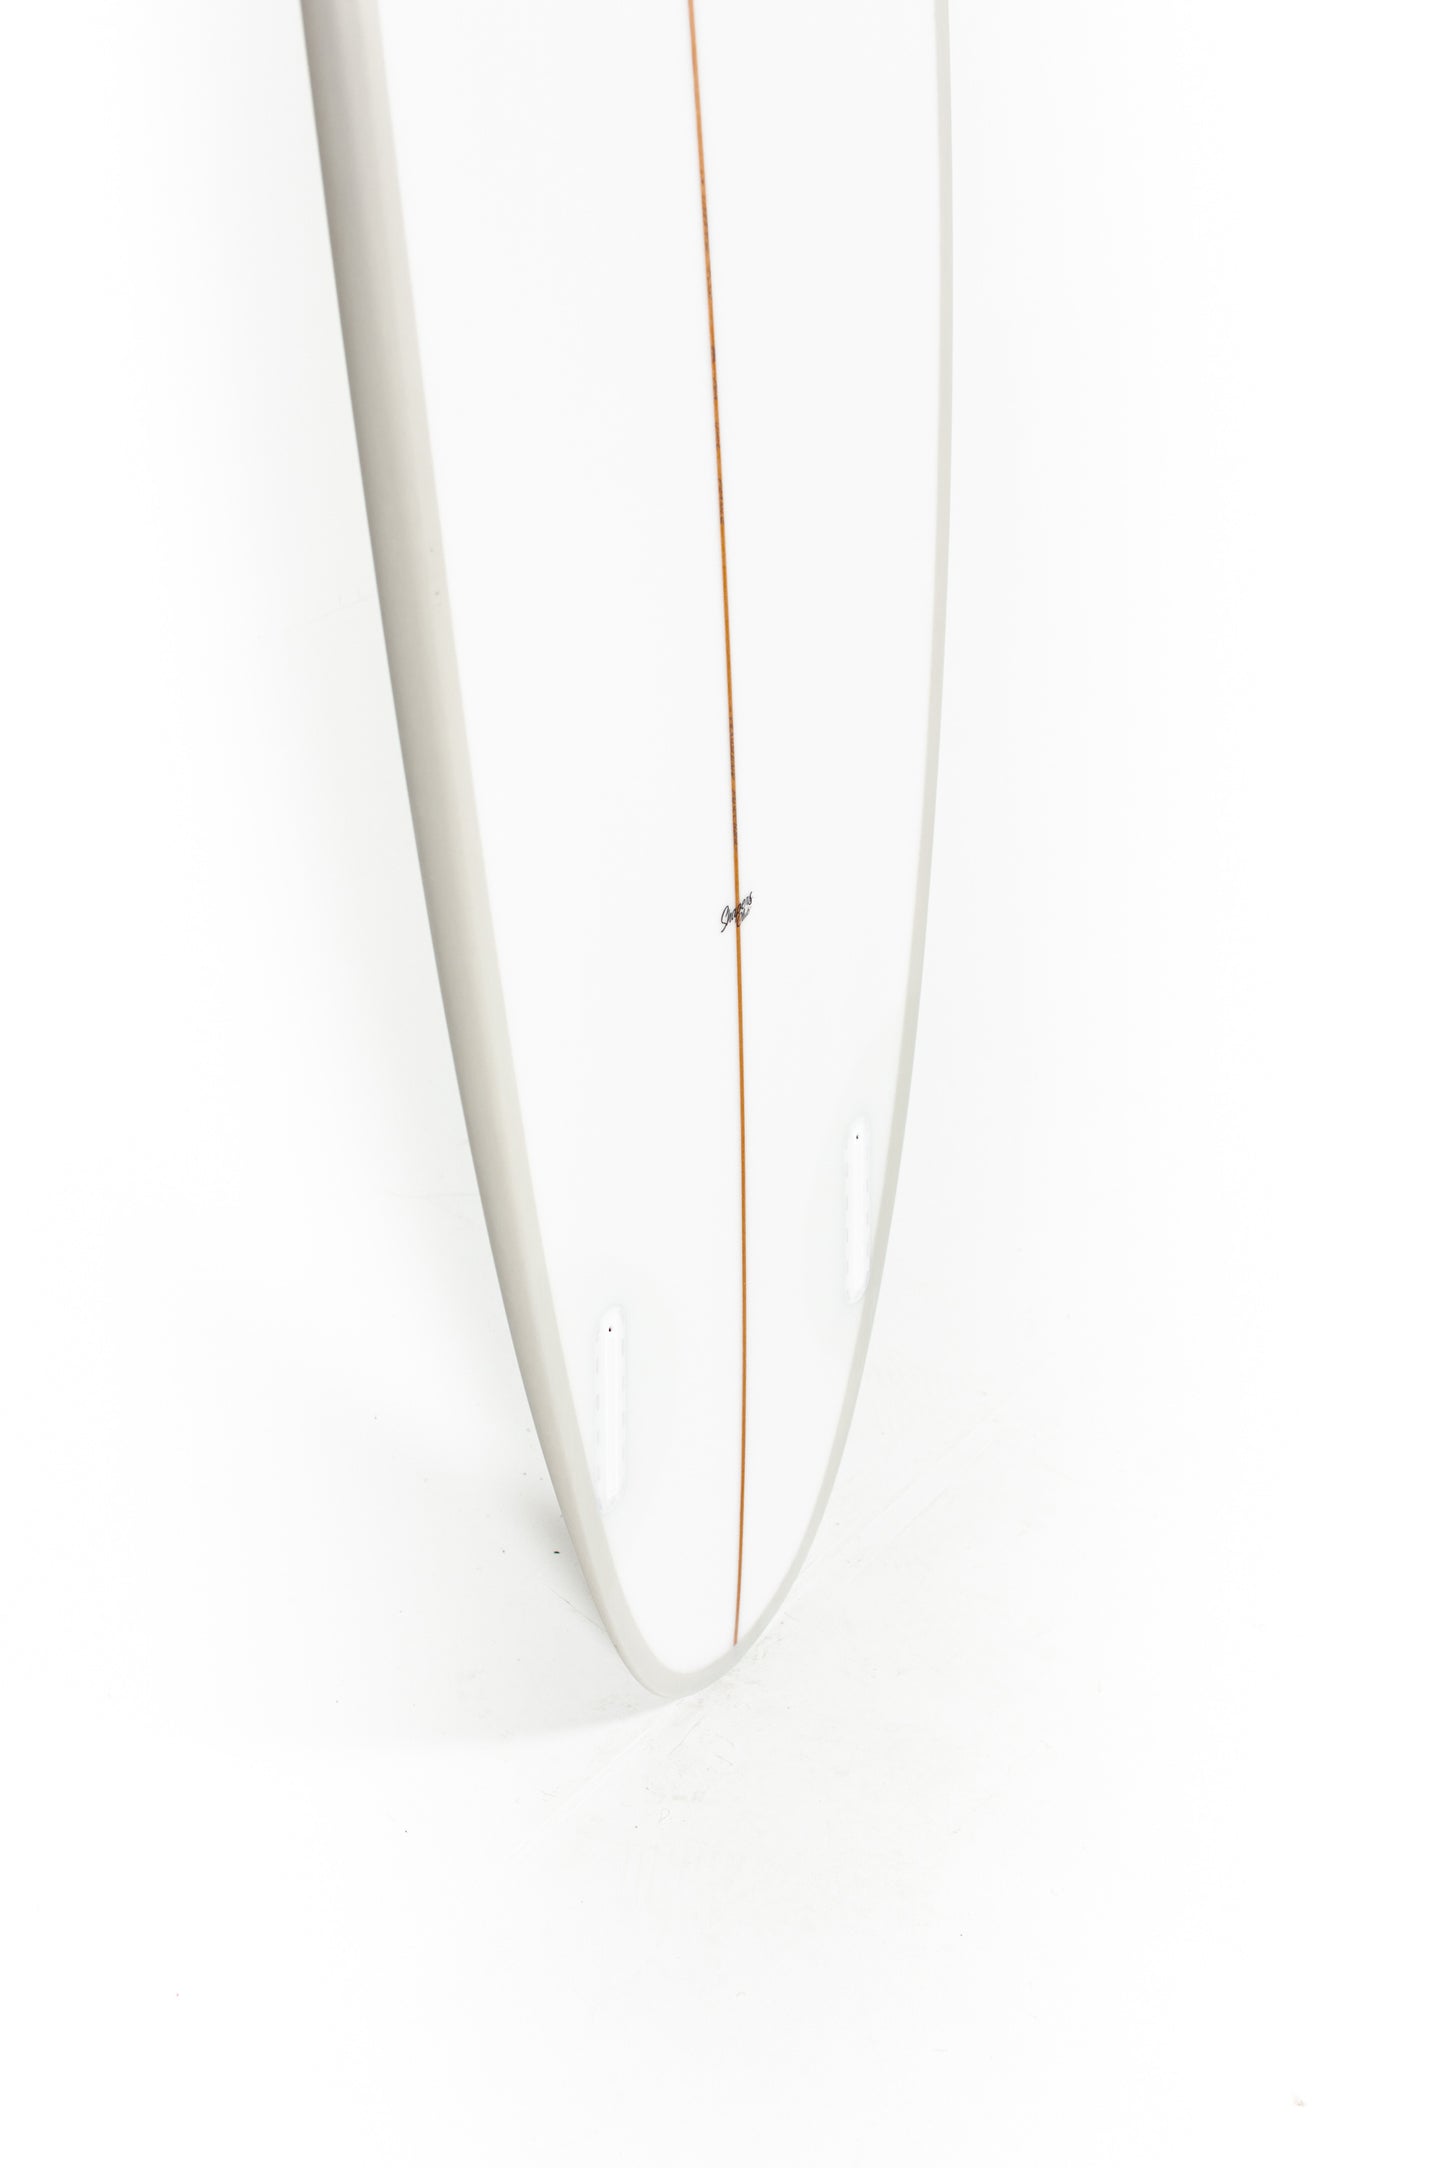 
                  
                    Pukas Surf Shop - Joshua Keogh Surfboard - LIBERATOR TWIN by Joshua Keogh - 6'8" x 21 x 2 5/8 - LIBERATOR68
                  
                